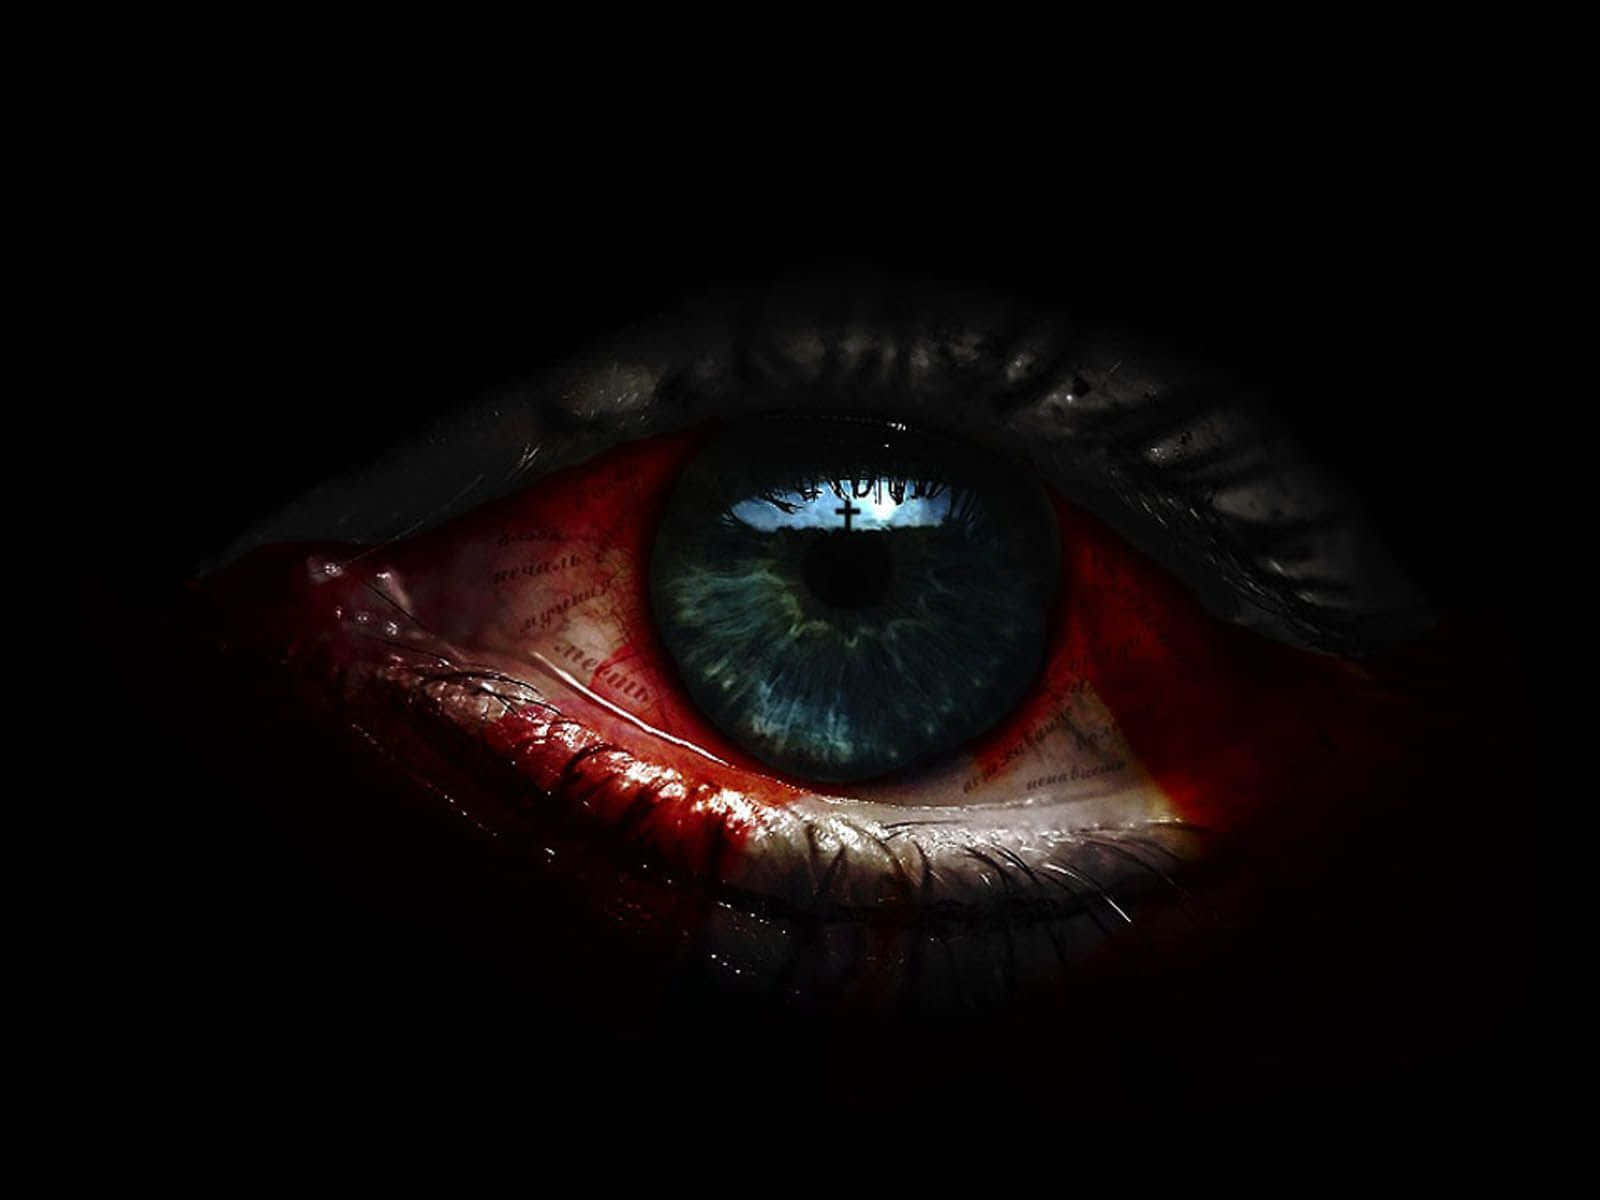 Bleeding Eyes Digital Art Wallpaper